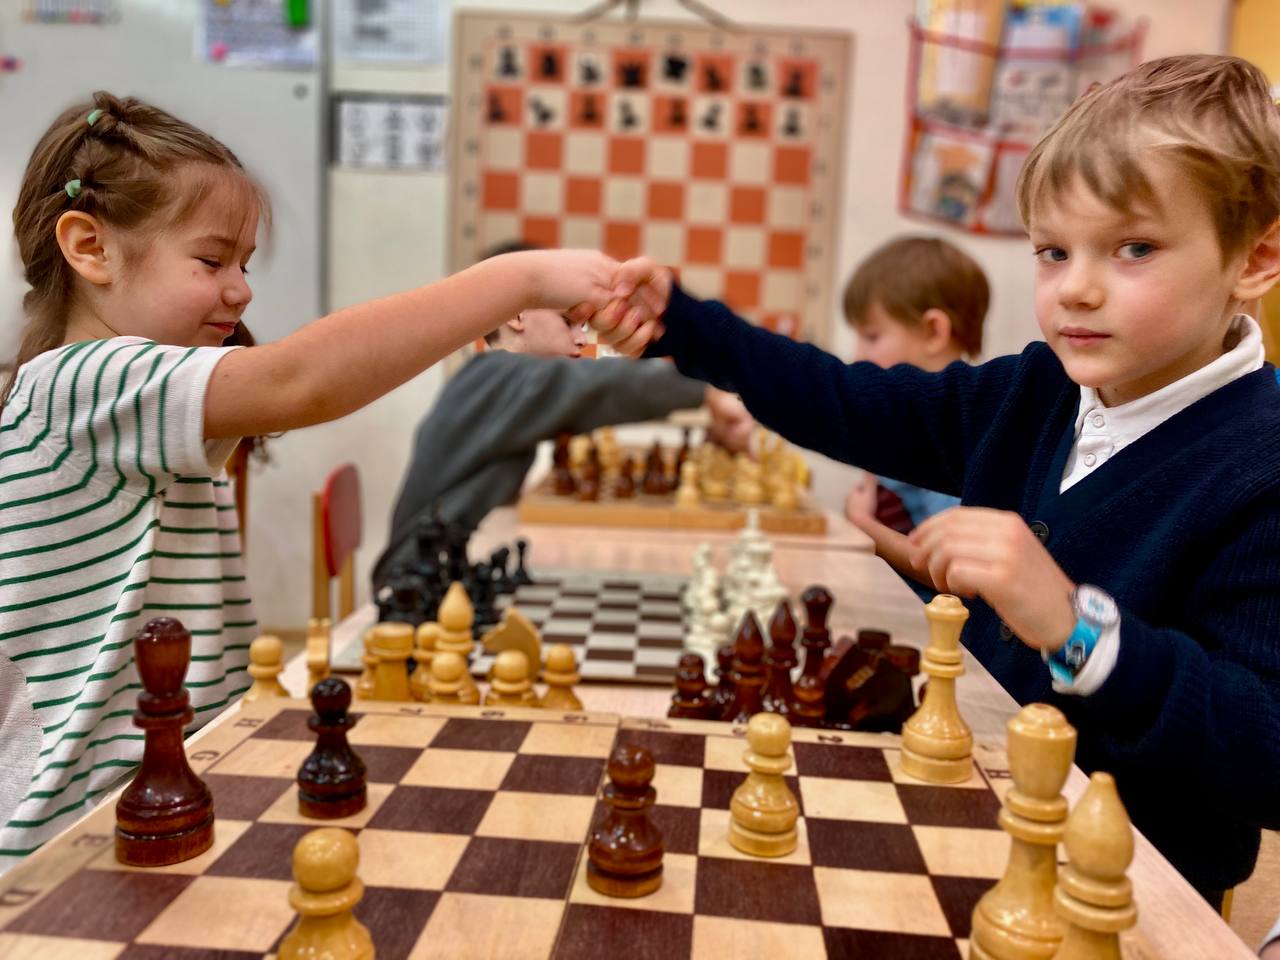 Chess tournament